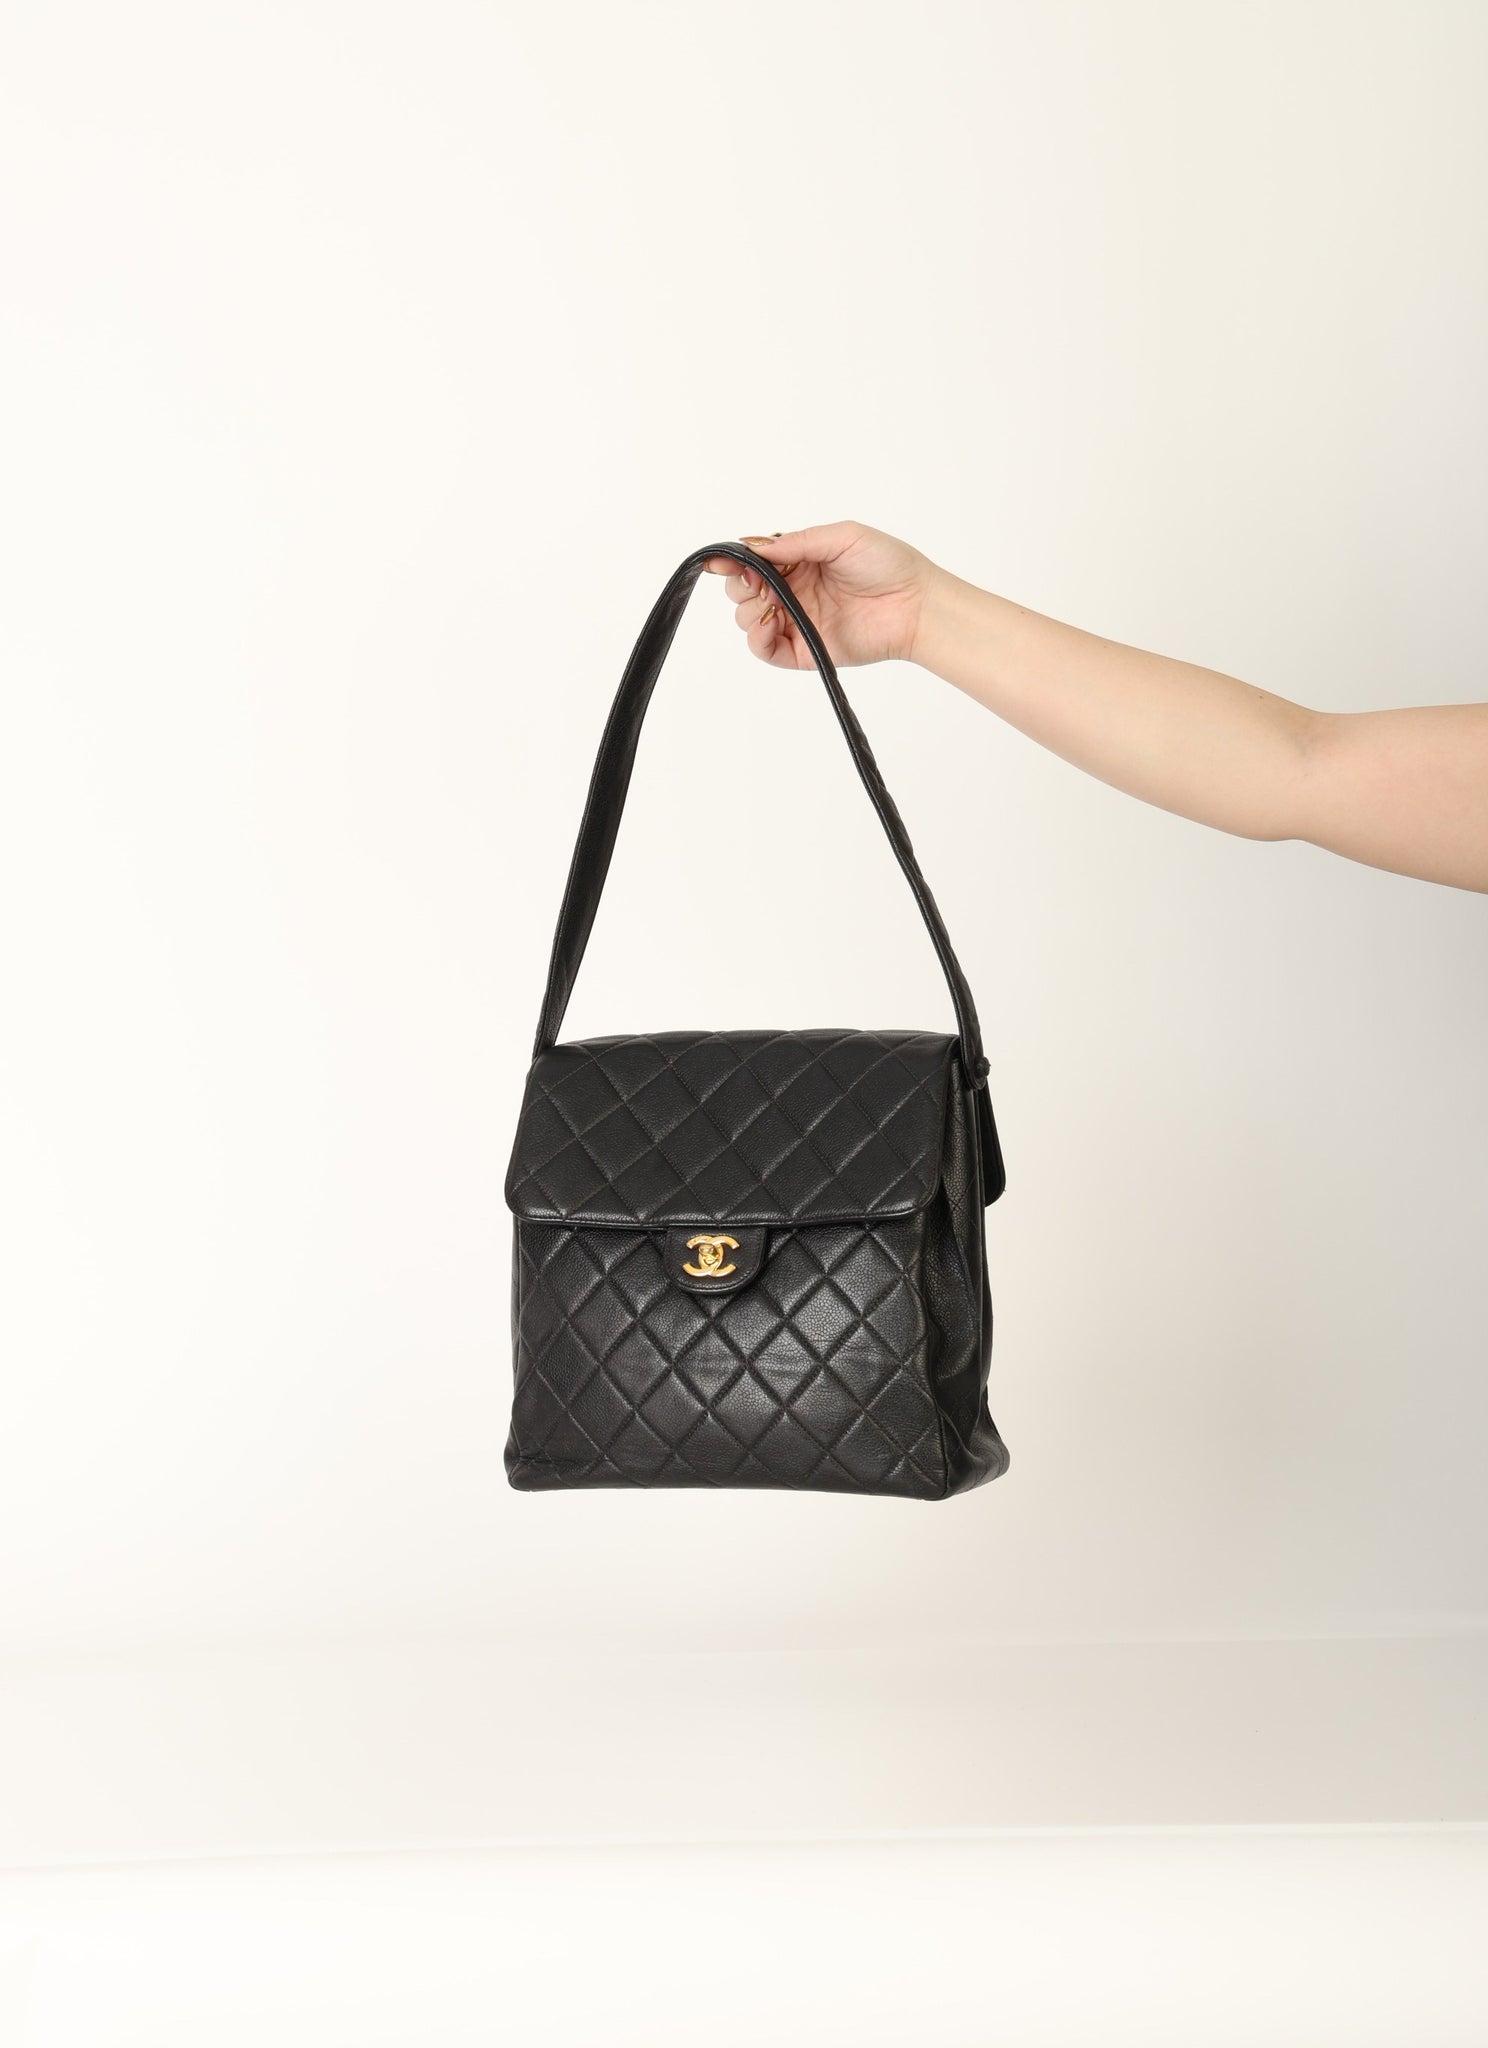 Chanel Caviar Double Turnlock Shoulder Bag